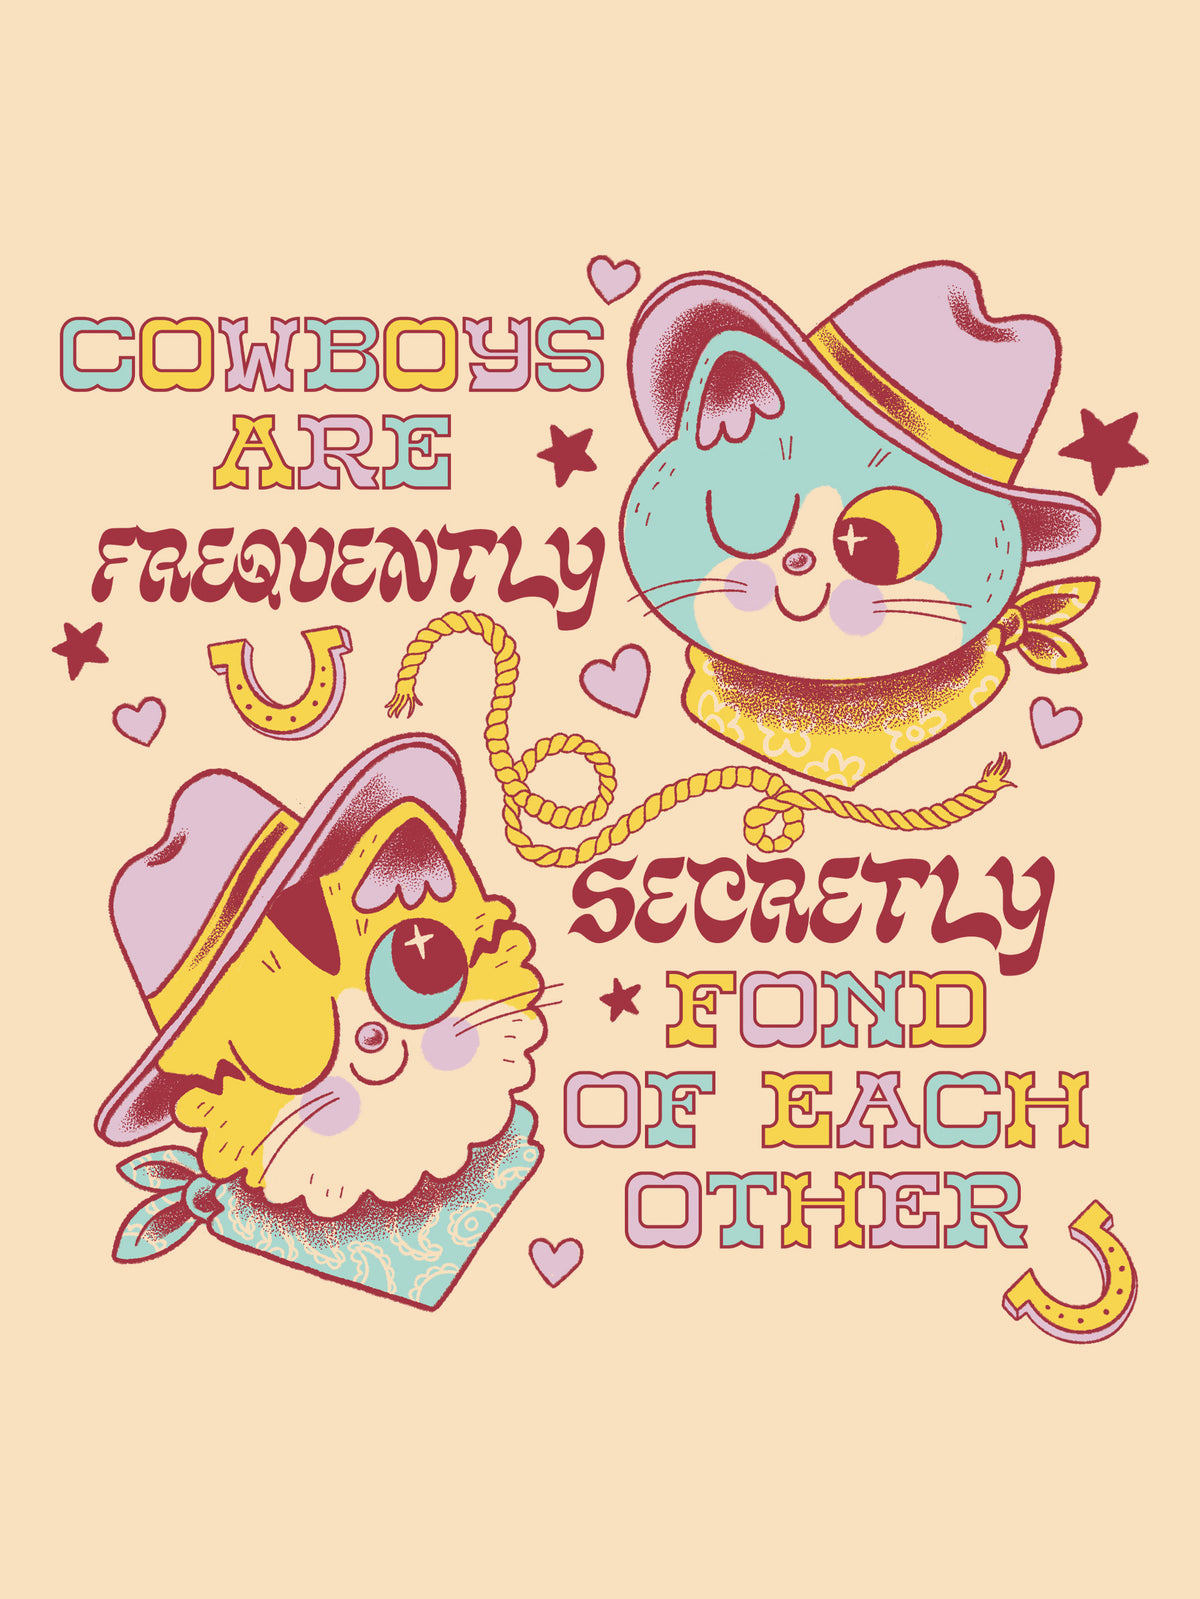 Cowboy Cats by Pinkgabbercat